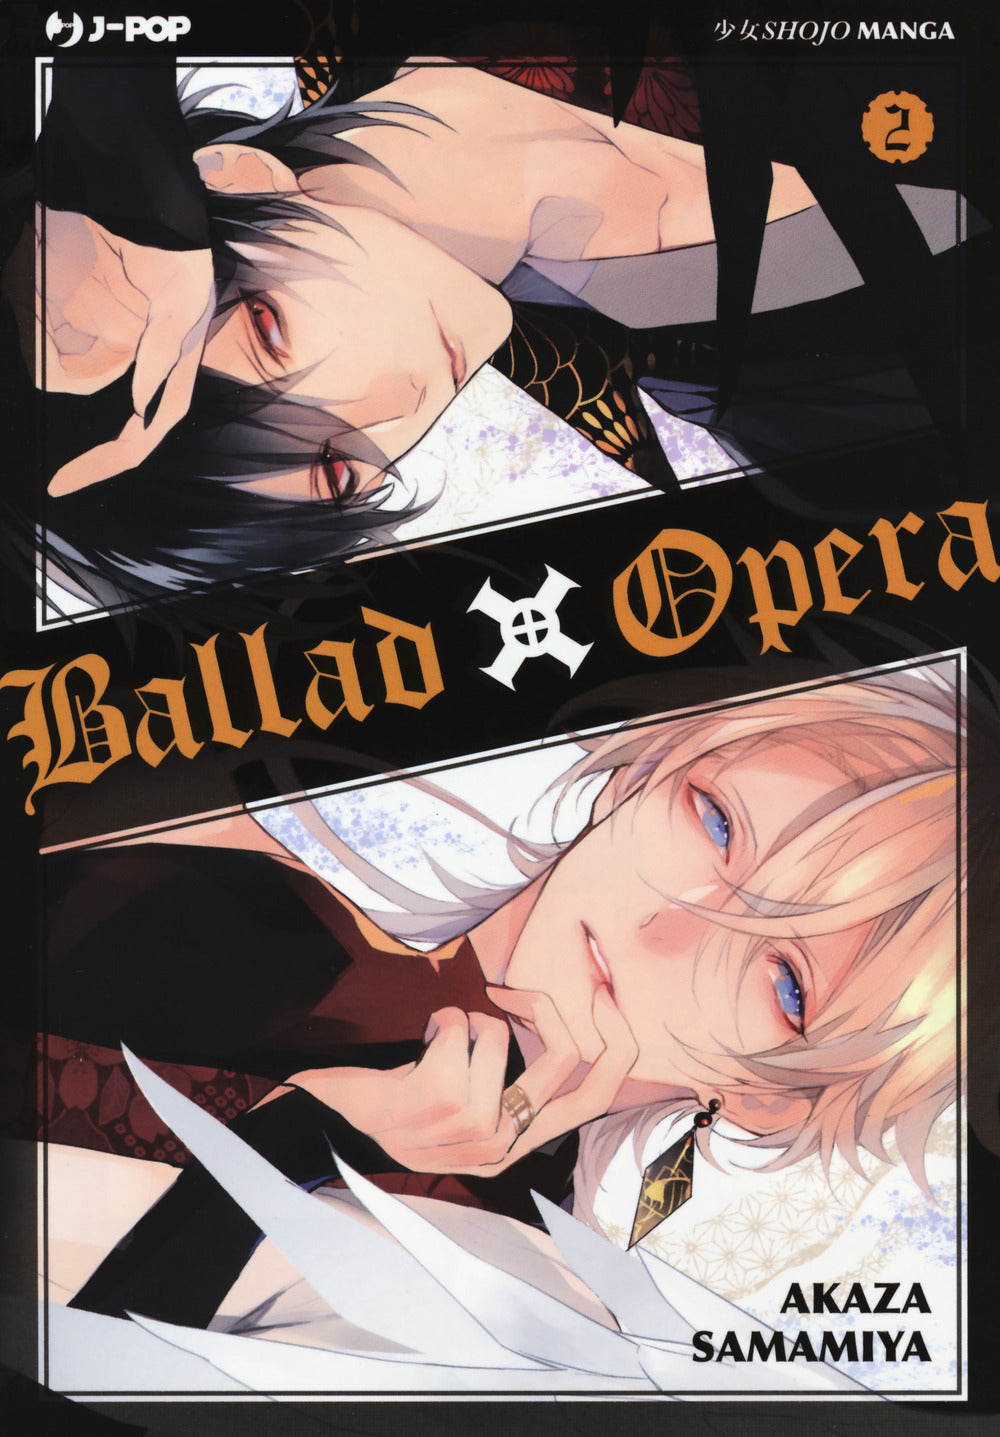 Ballad X Opera. Vol. 2.